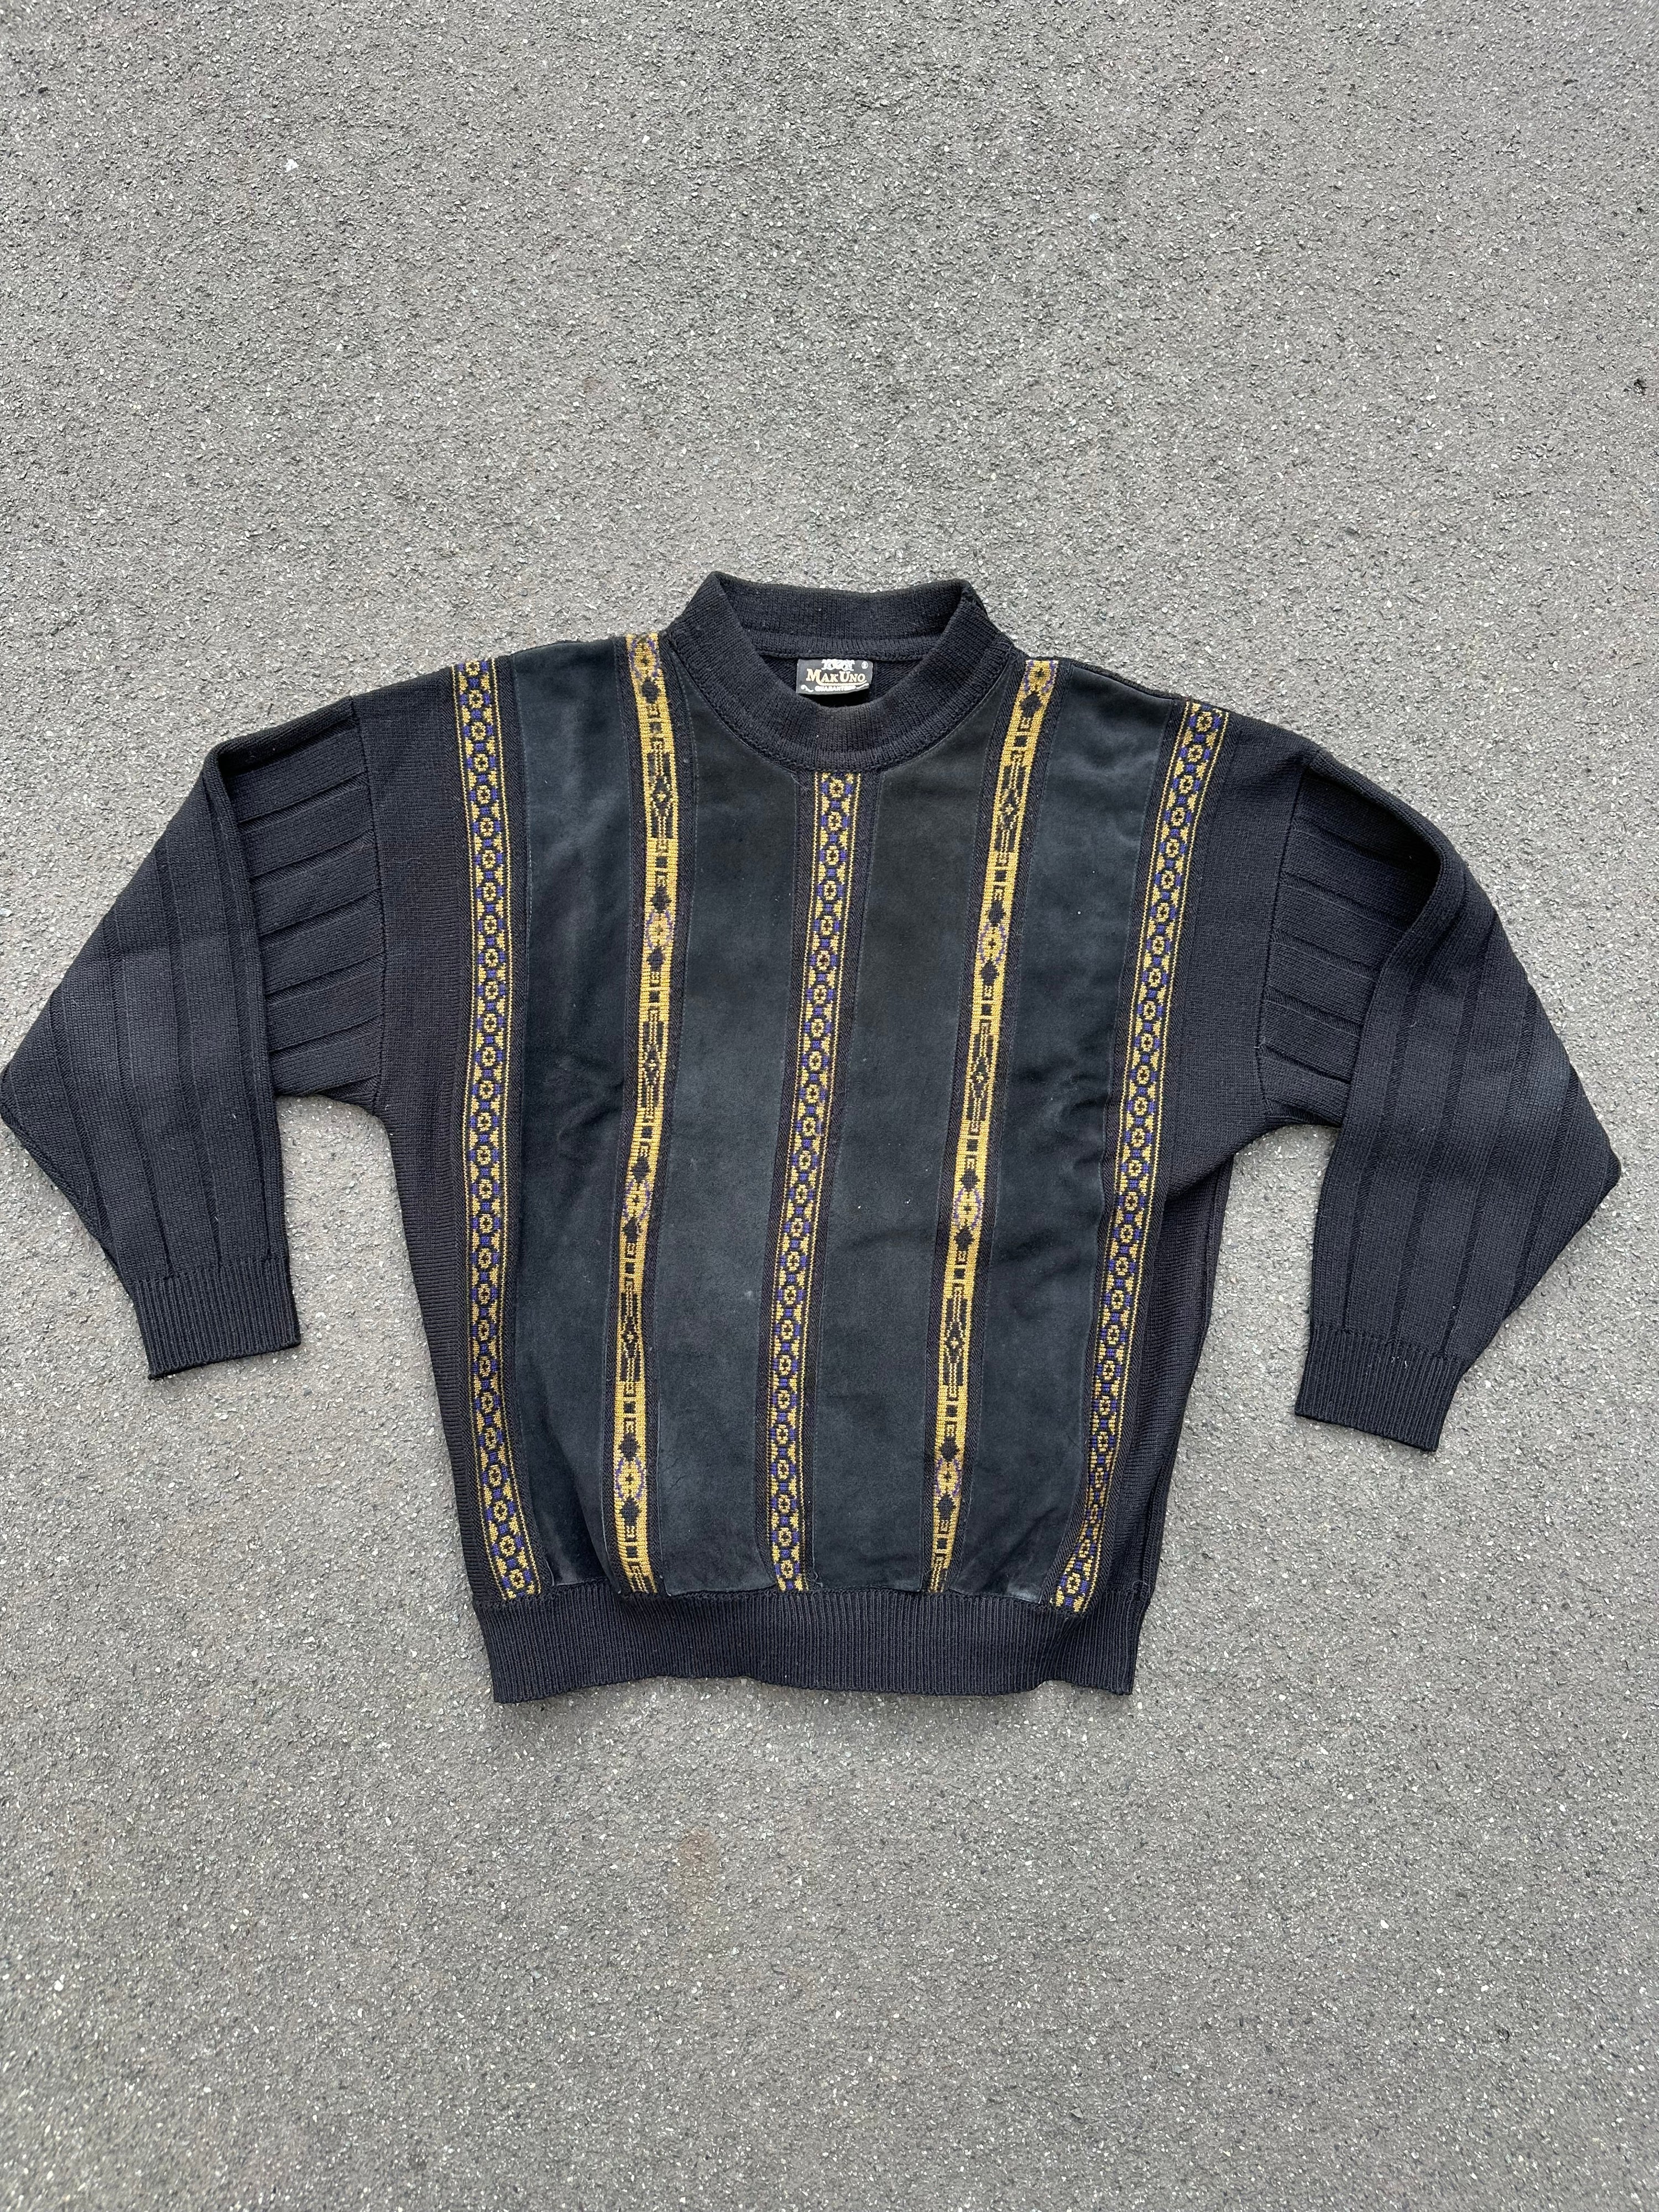 Knit Wildleather Sweater (L)